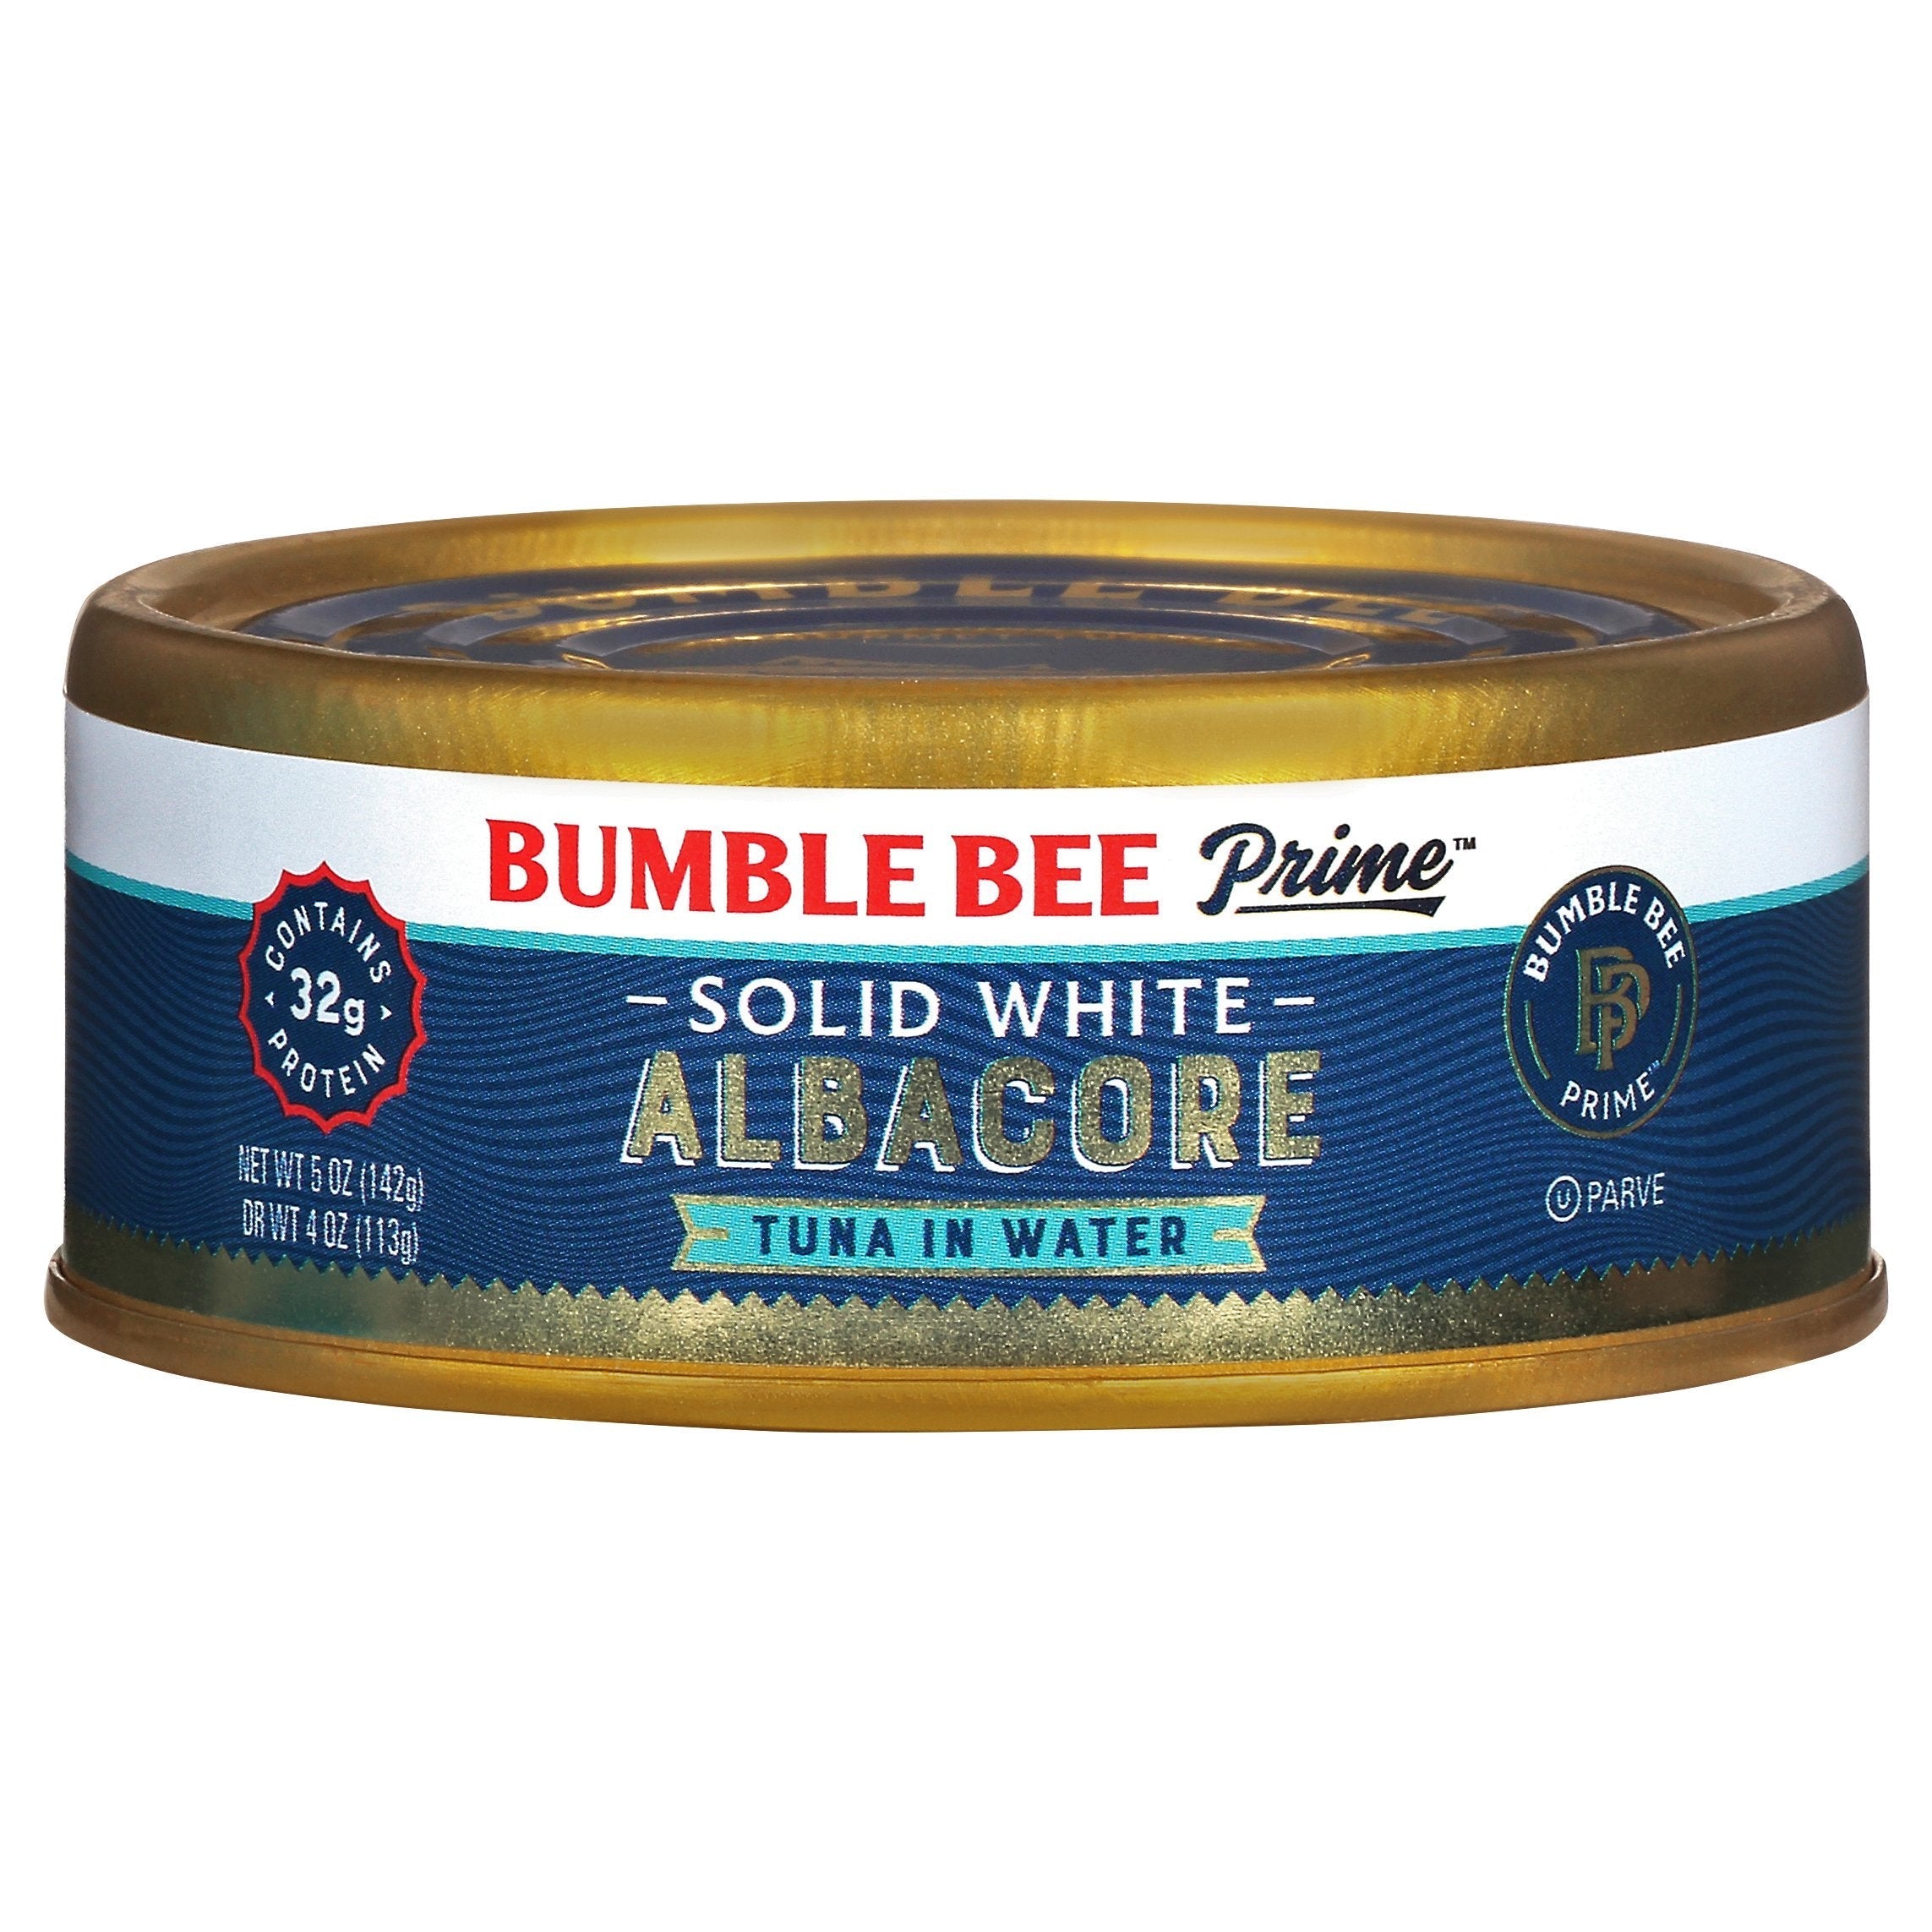 Bumble Bee Albacore Tuna in Water, 5 oz Can (24 Pack) - Wild Caught, 29g Protein, Non-GMO, Gluten Free, Kosher - for Tuna Salad & Recipes